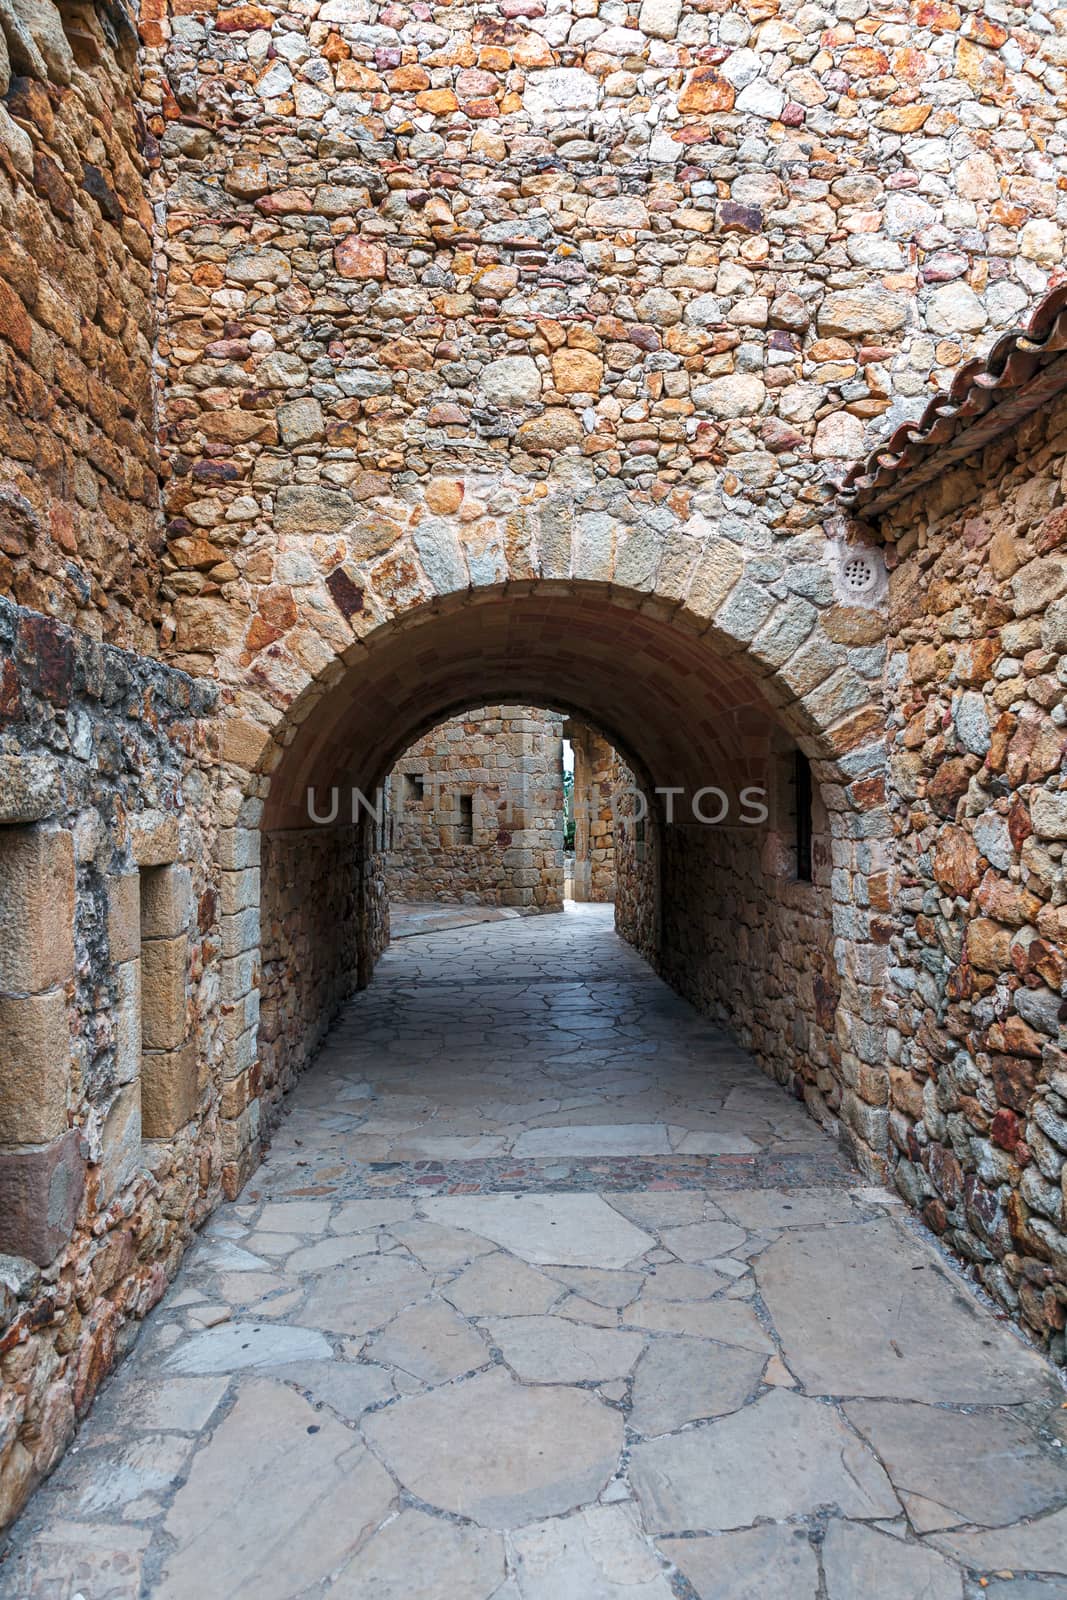 Castle de Pals, historic stone walls and arches, Pals, Spain by seka33